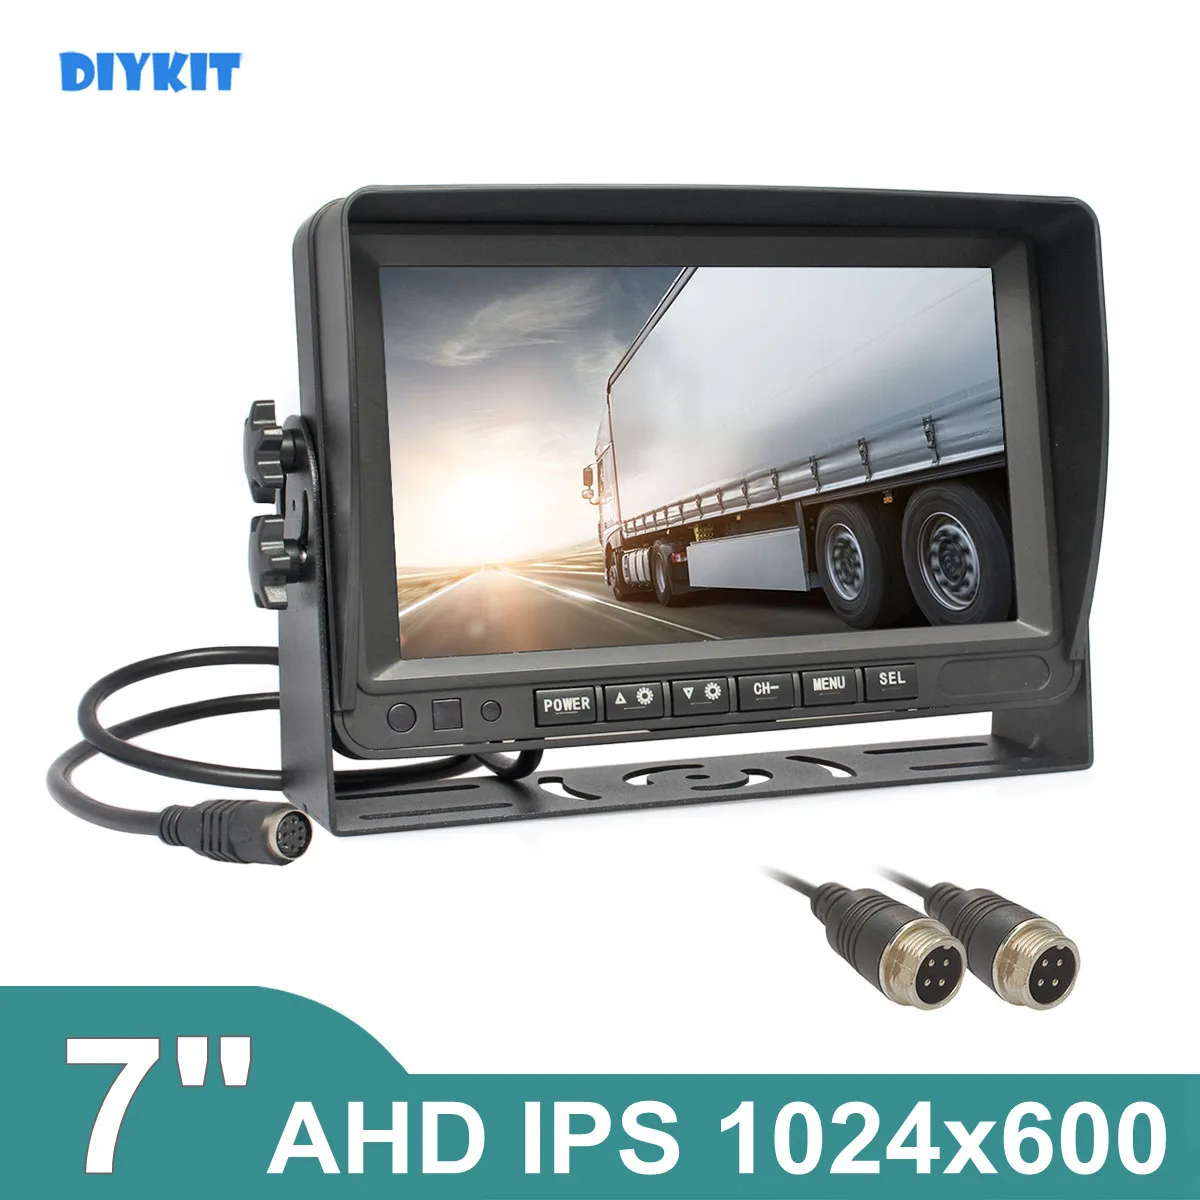 

DIYKIT 7inch AHD IPS Car Monitor Rear View Monitor Max Support 1080P AHD Camera with 2 x 4PIN Video Input 12V-24V DC